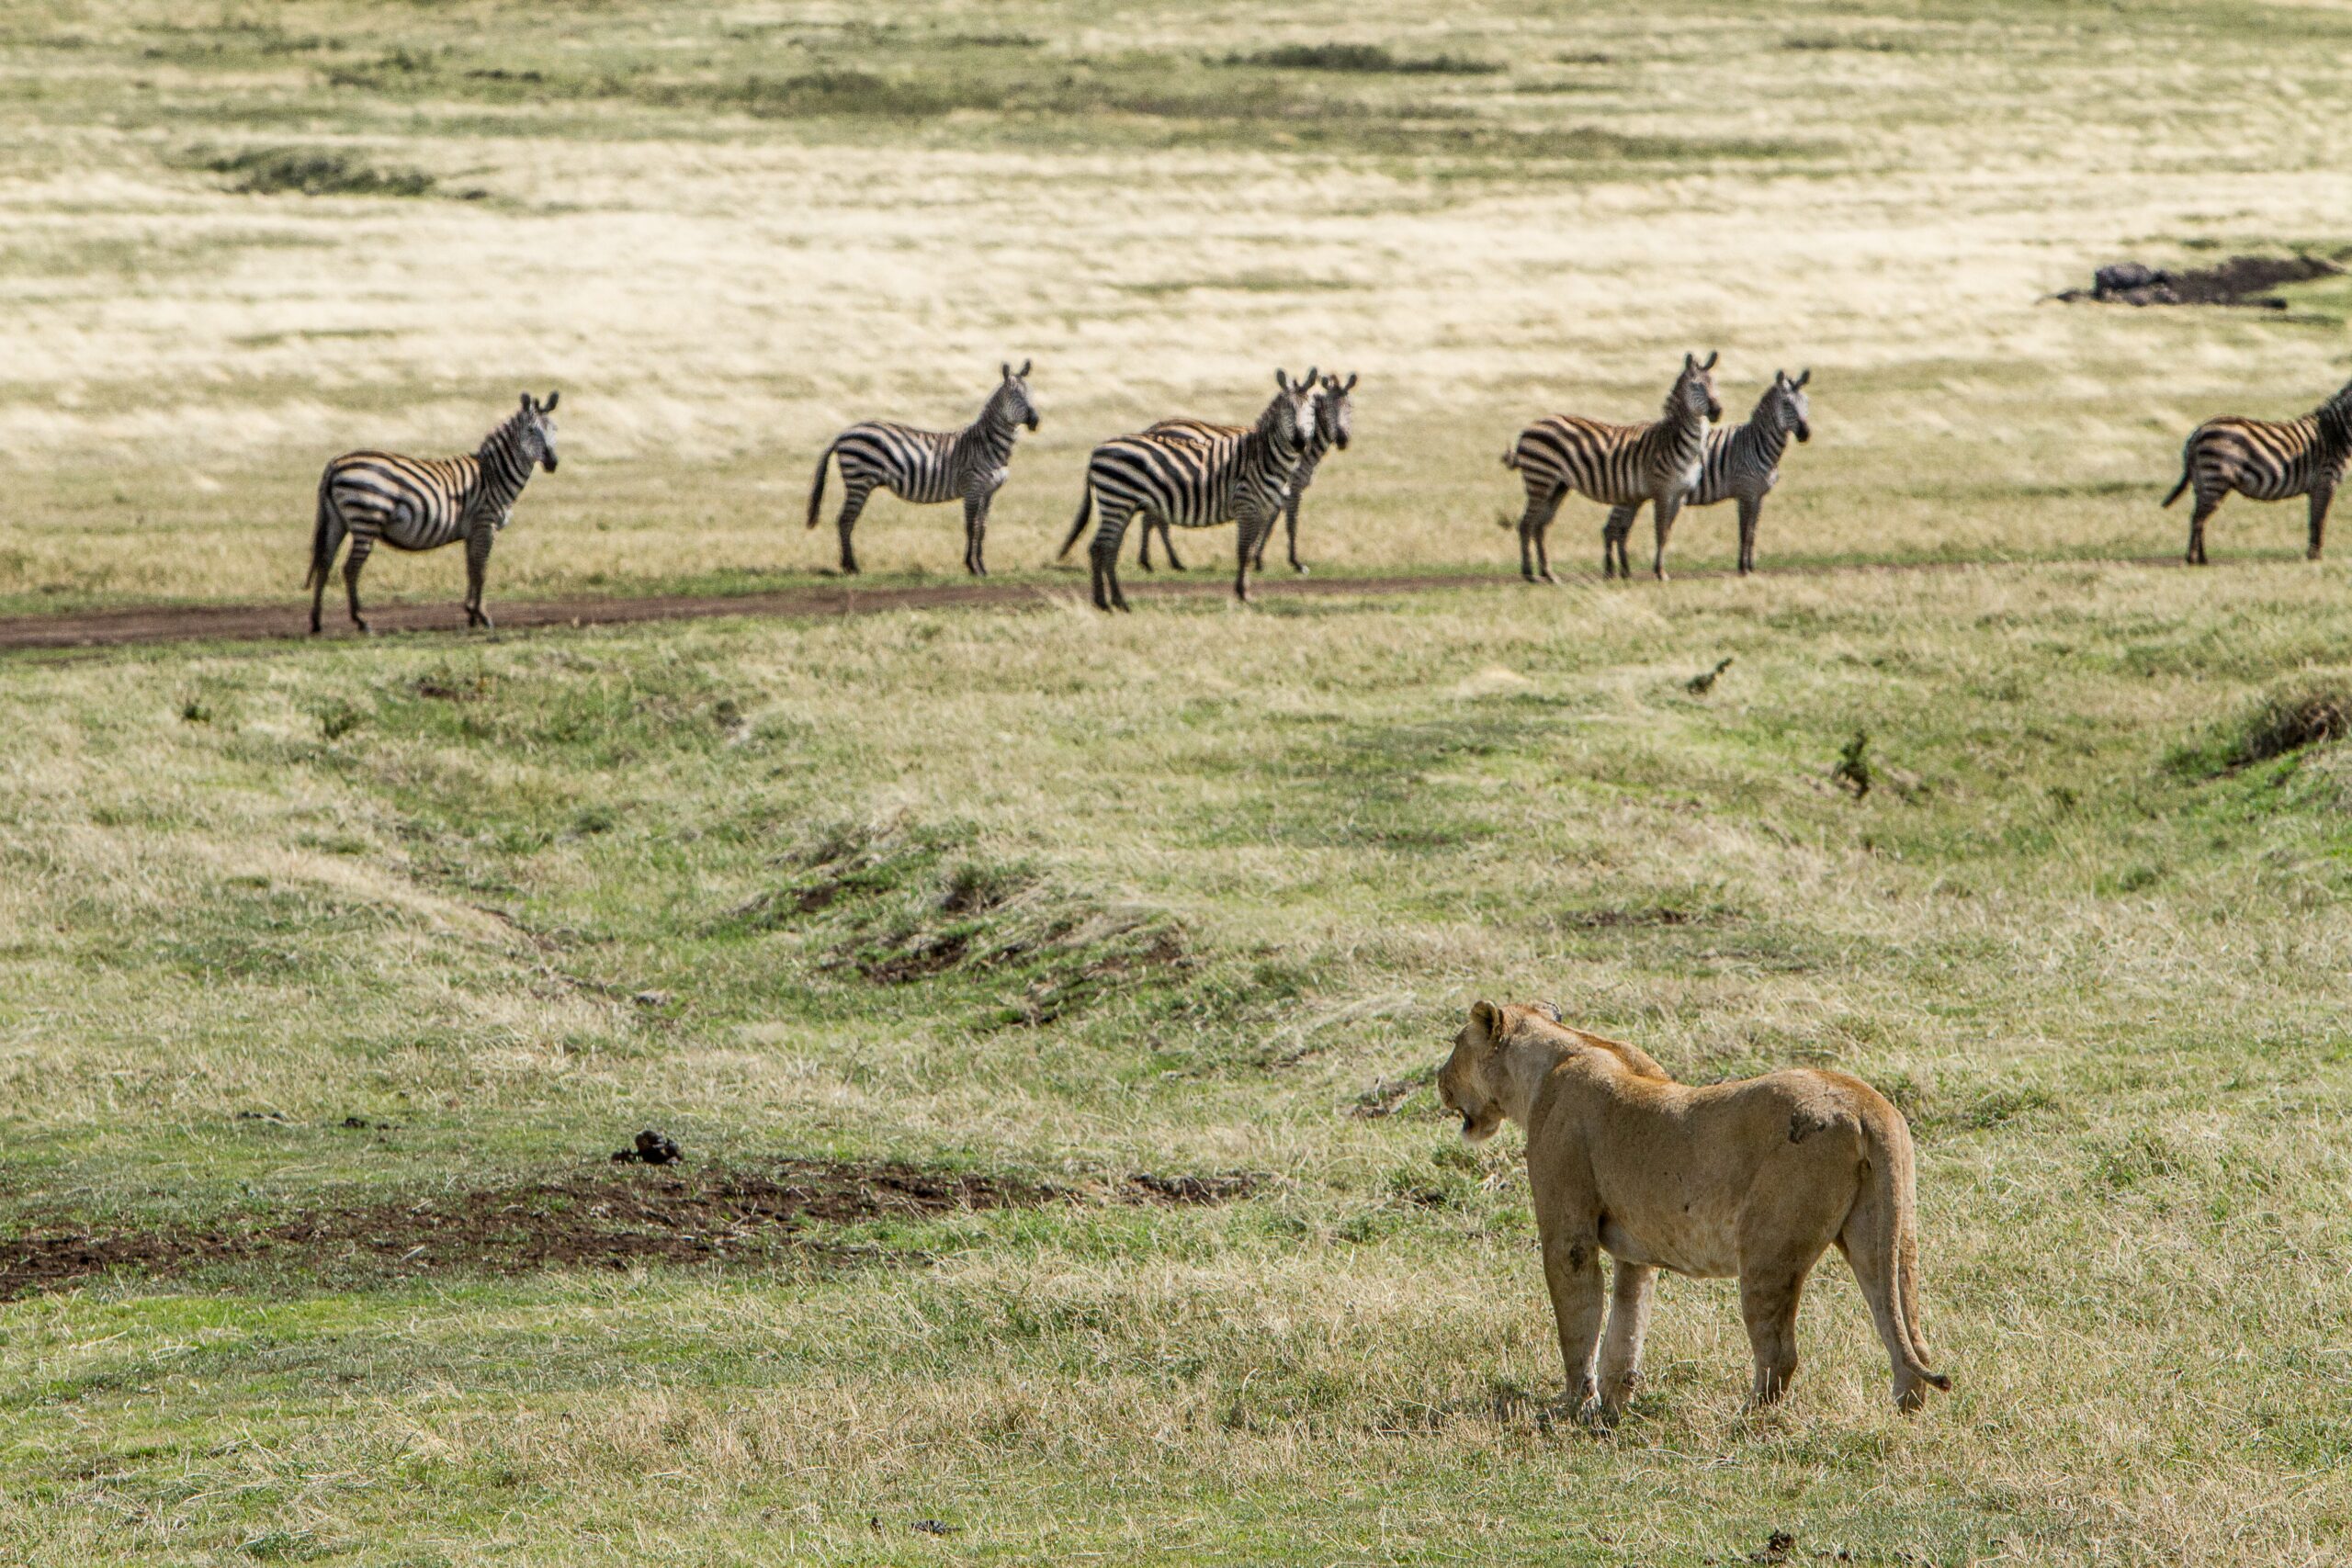 Tanzania-Ngorongoro-Predator-Field-Zebra-Wildlife-Savanna-Camping-Hunting-National-Geographic-Mammal-Foal-Outdoors-Grassland